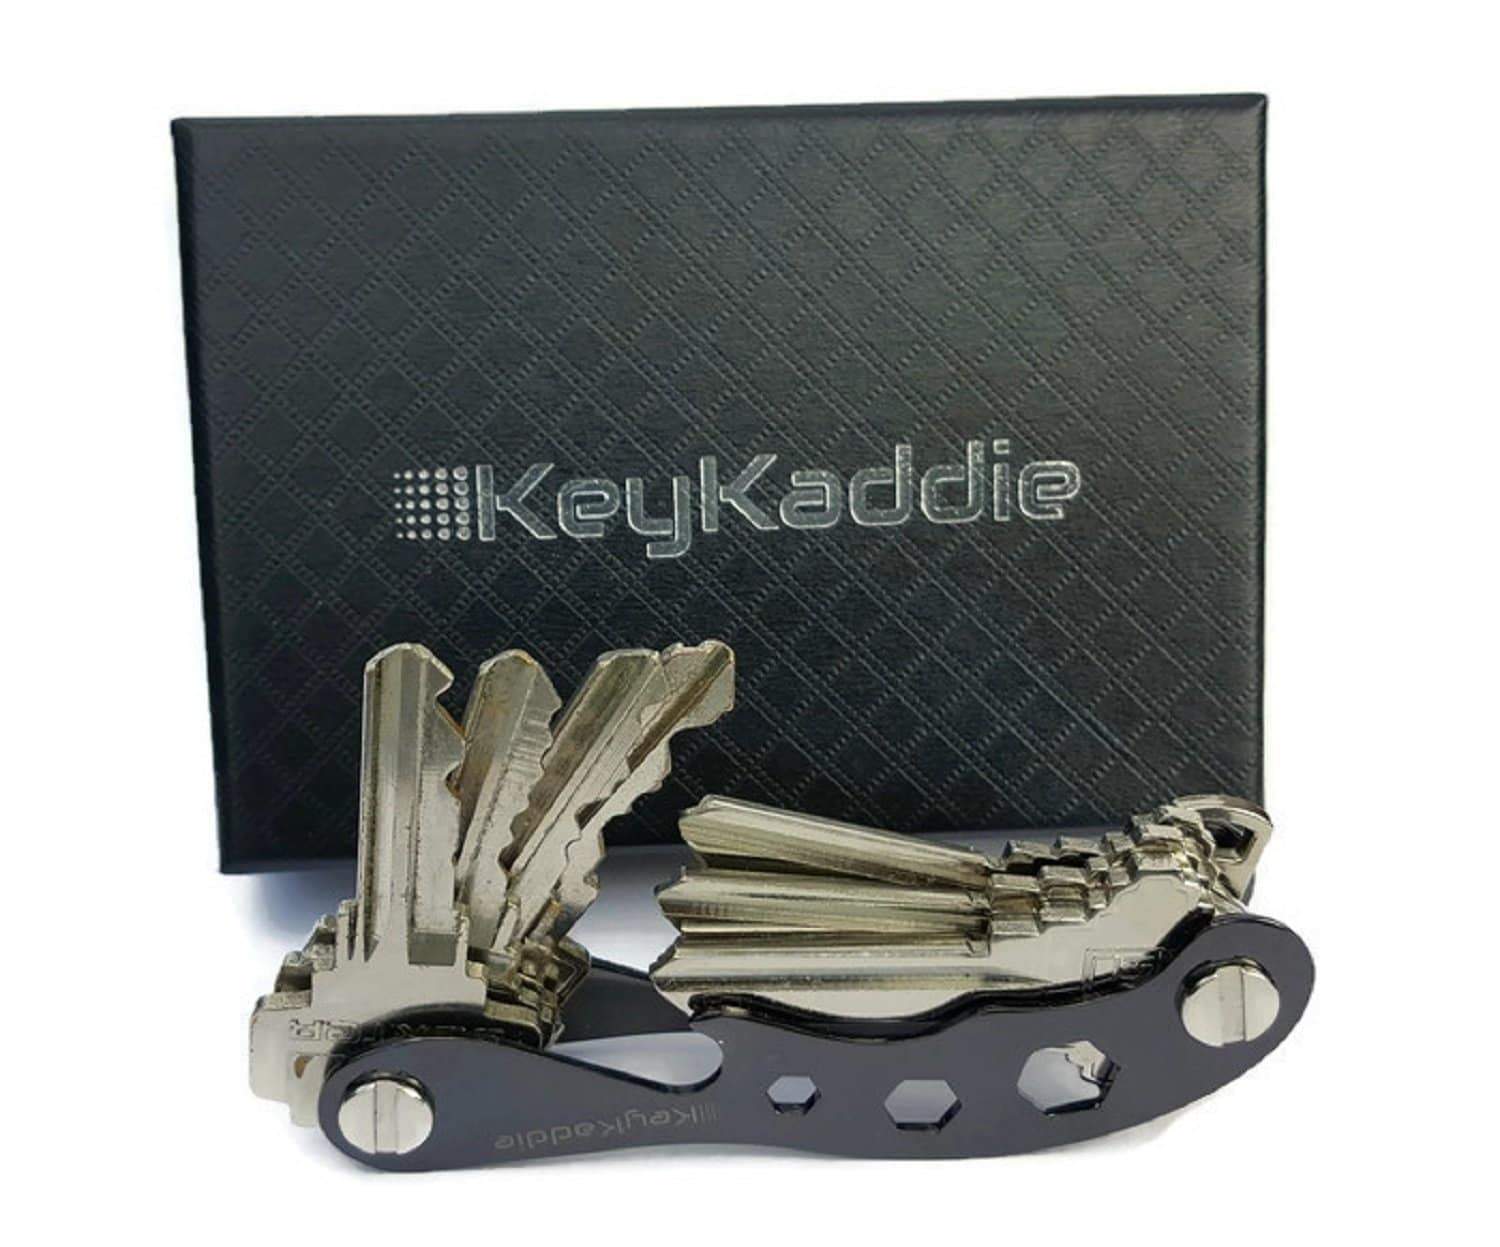 Save key holder compact key organizer multitool keychain and bottle opener including durable zinc frame black anti loosening spacers screws by keykaddie